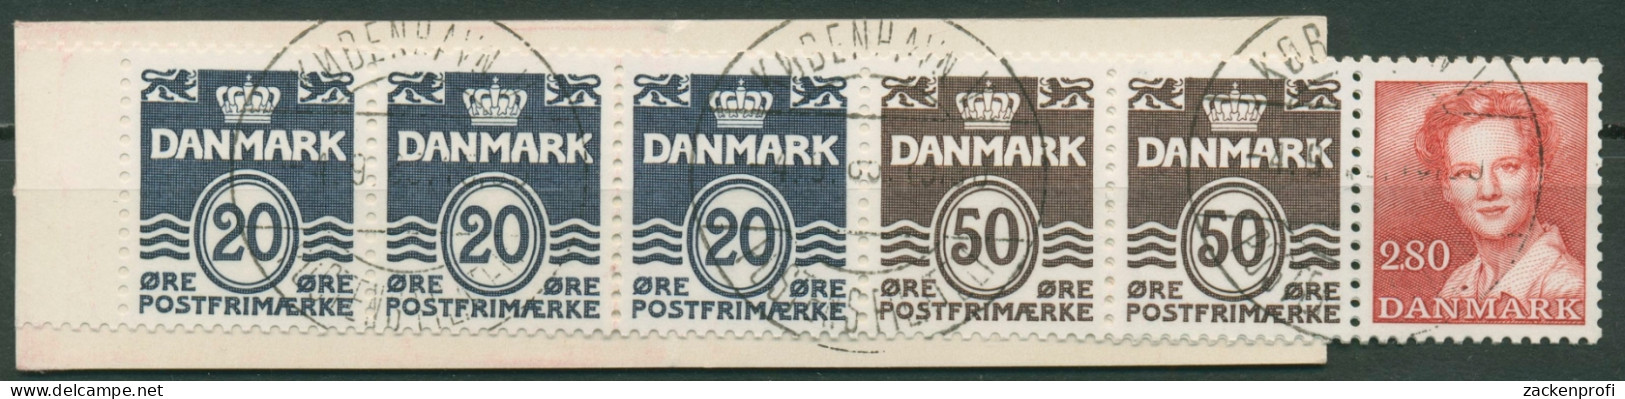 Dänemark 1985 Ziffern/Königin Markenheftchen MH 34 Gestempelt (C96576) - Carnets